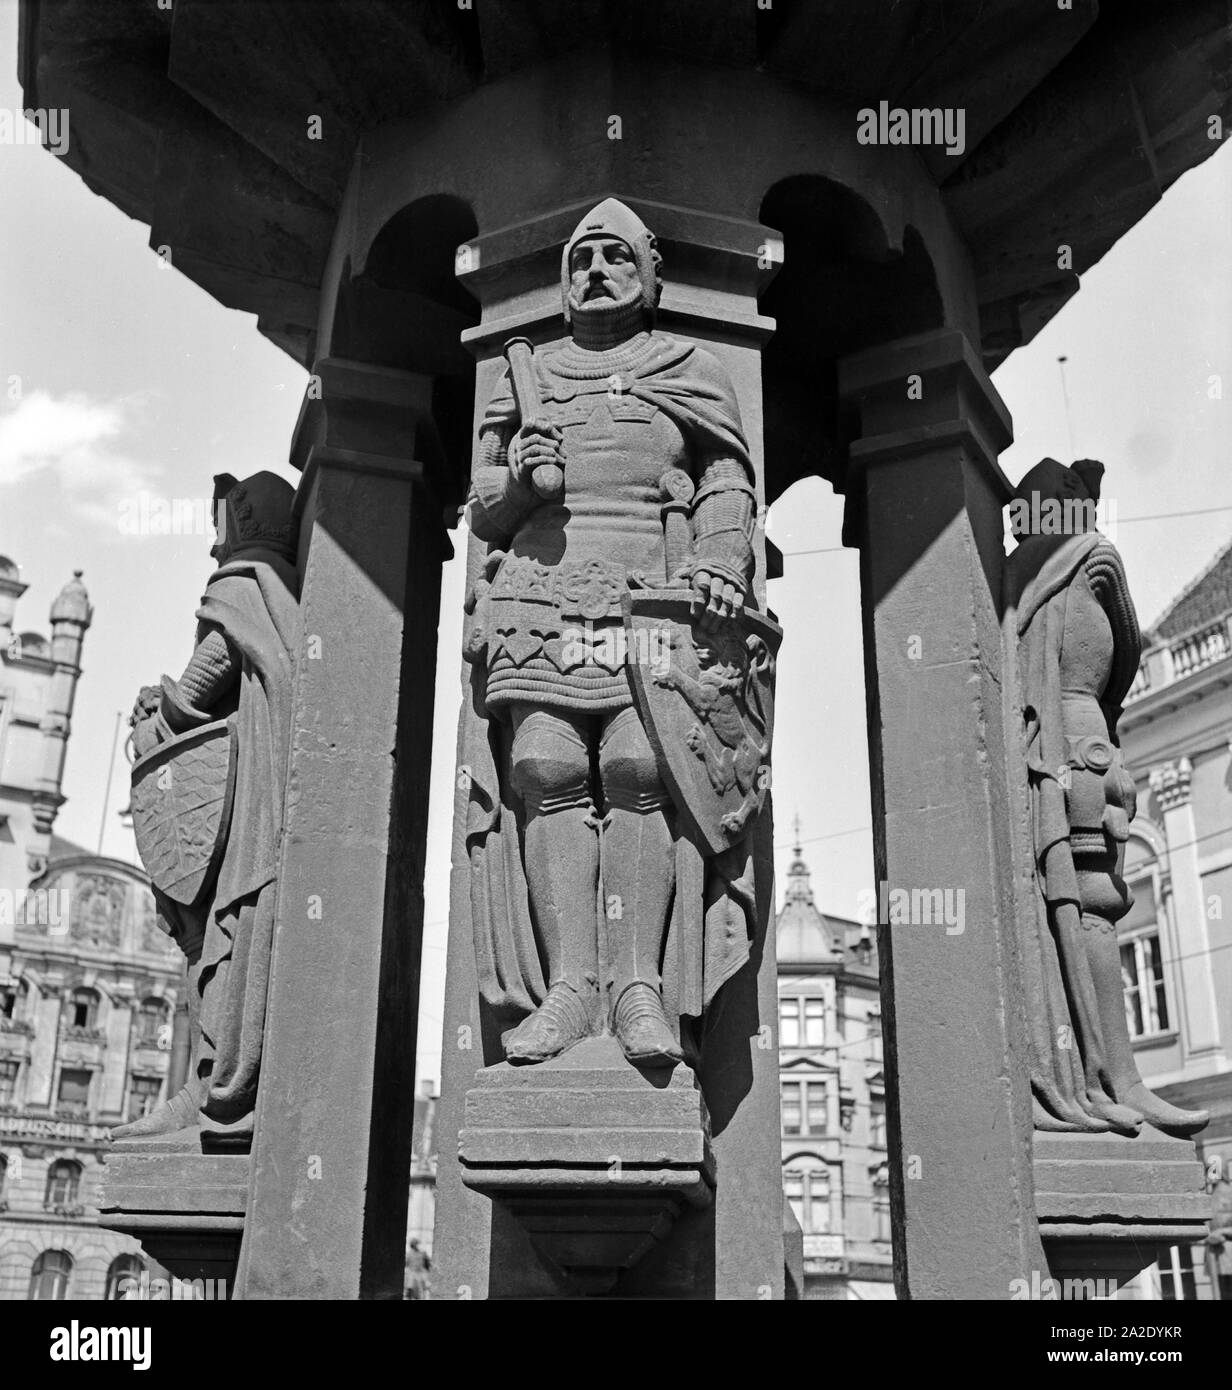 Ritter als Brunnenfiguren an einem Brunnen in Magdeburg, Deutschland 1930er Jahre. Knights as sculptures of a fountain in the old city of Magdeburg, Germany 1930s. Stock Photo